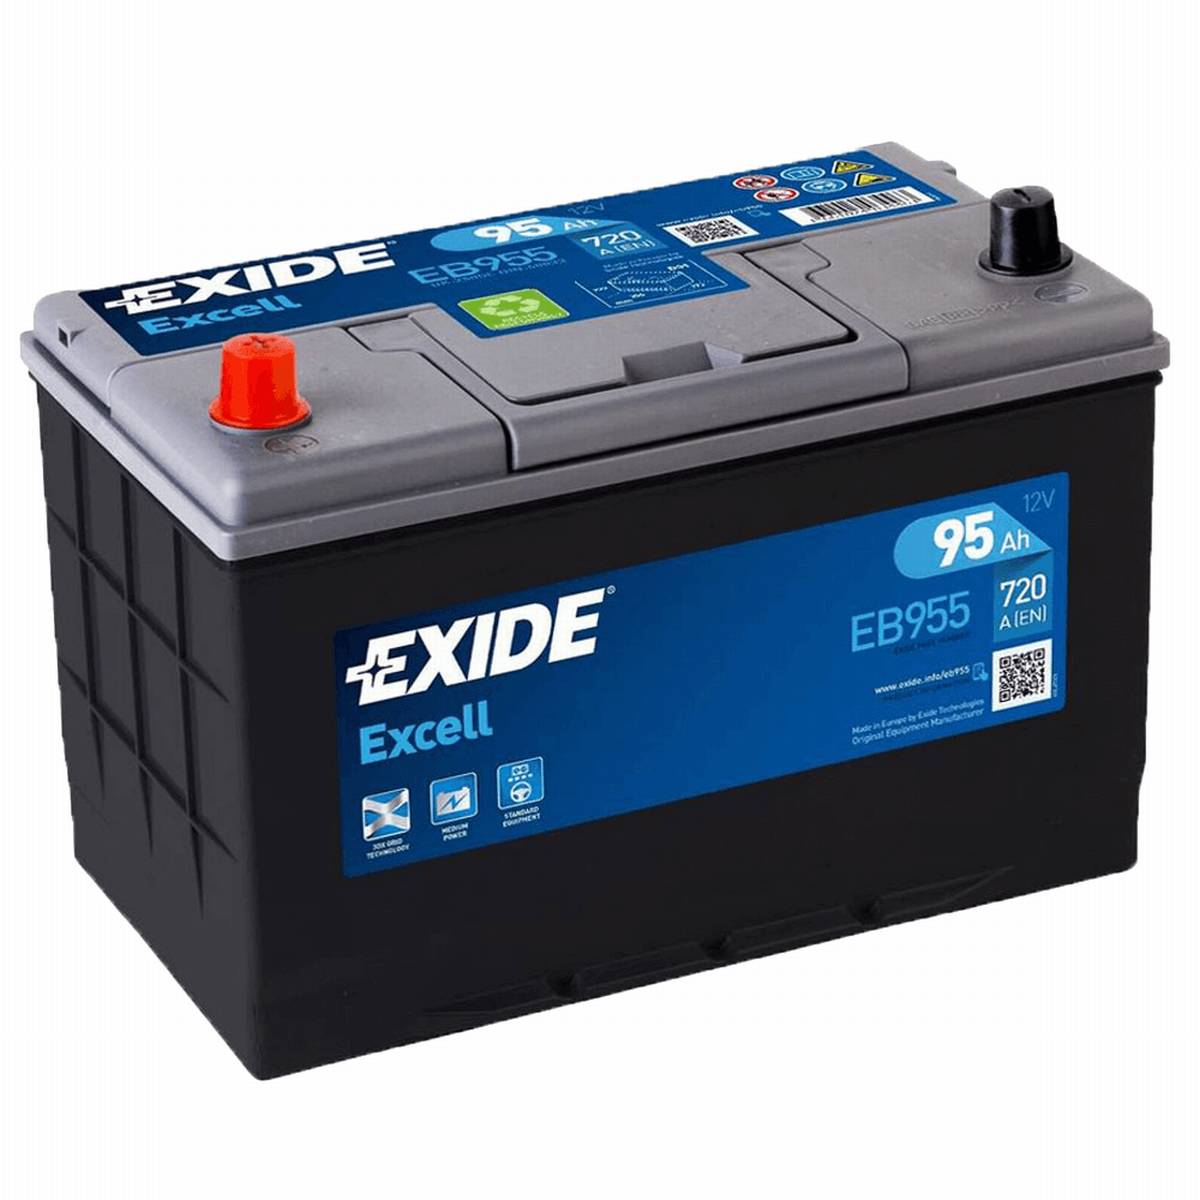 Exide EB955 Excell 12V 95Ah 720A Autobatterie